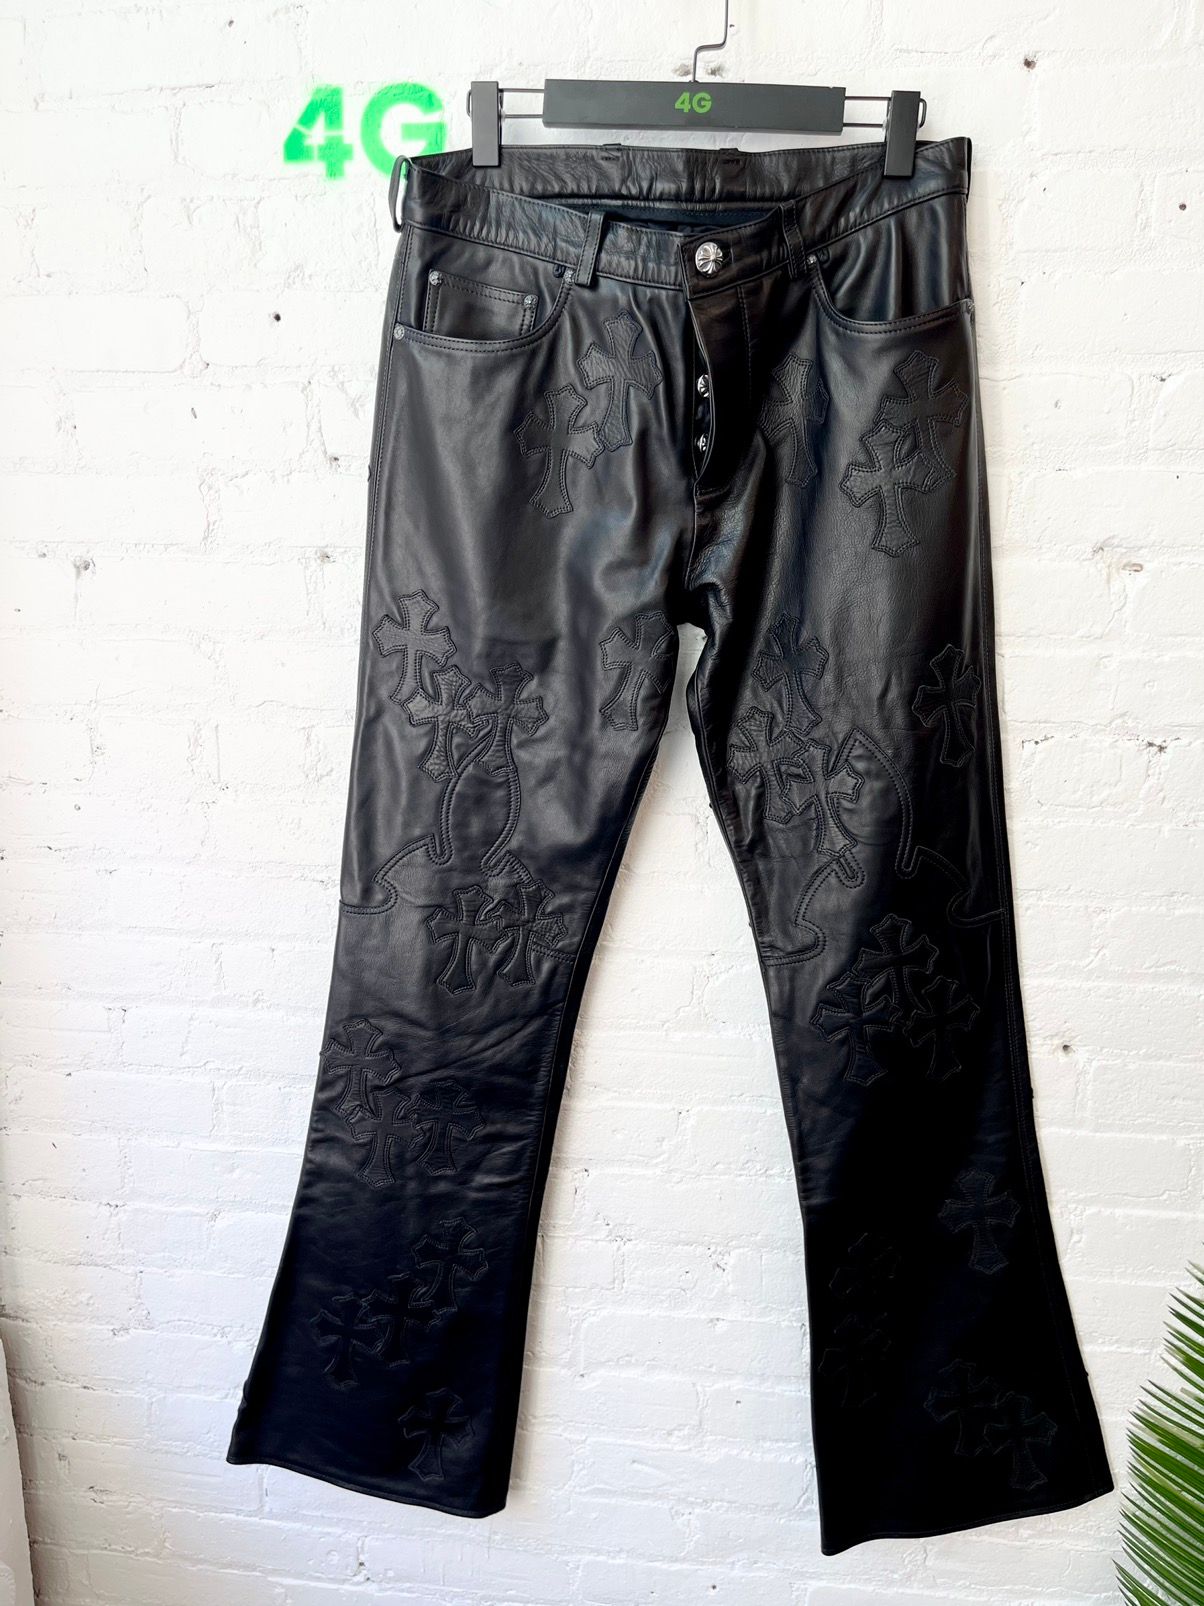 Chrome Hearts 70 Patch Black Leather Jeans Pants SZ 34 NEW